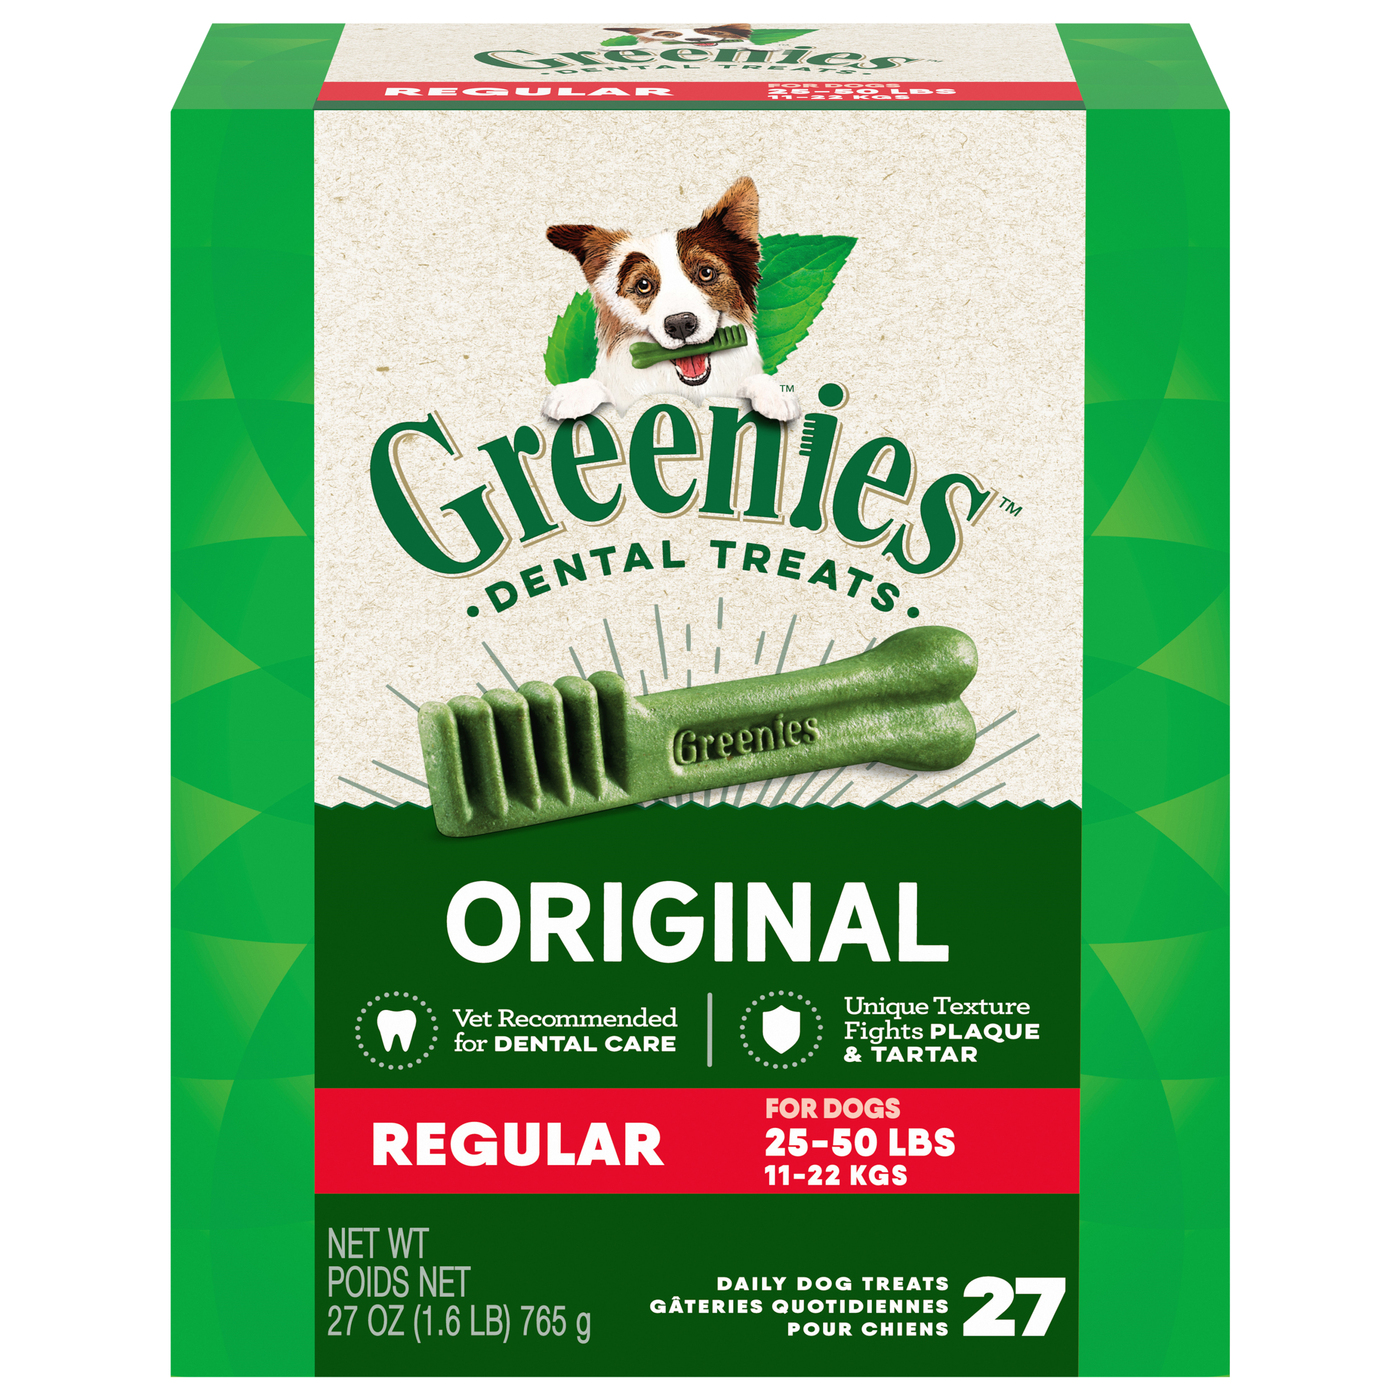 Greenies Original Regular Dental Treats 27 ct Box